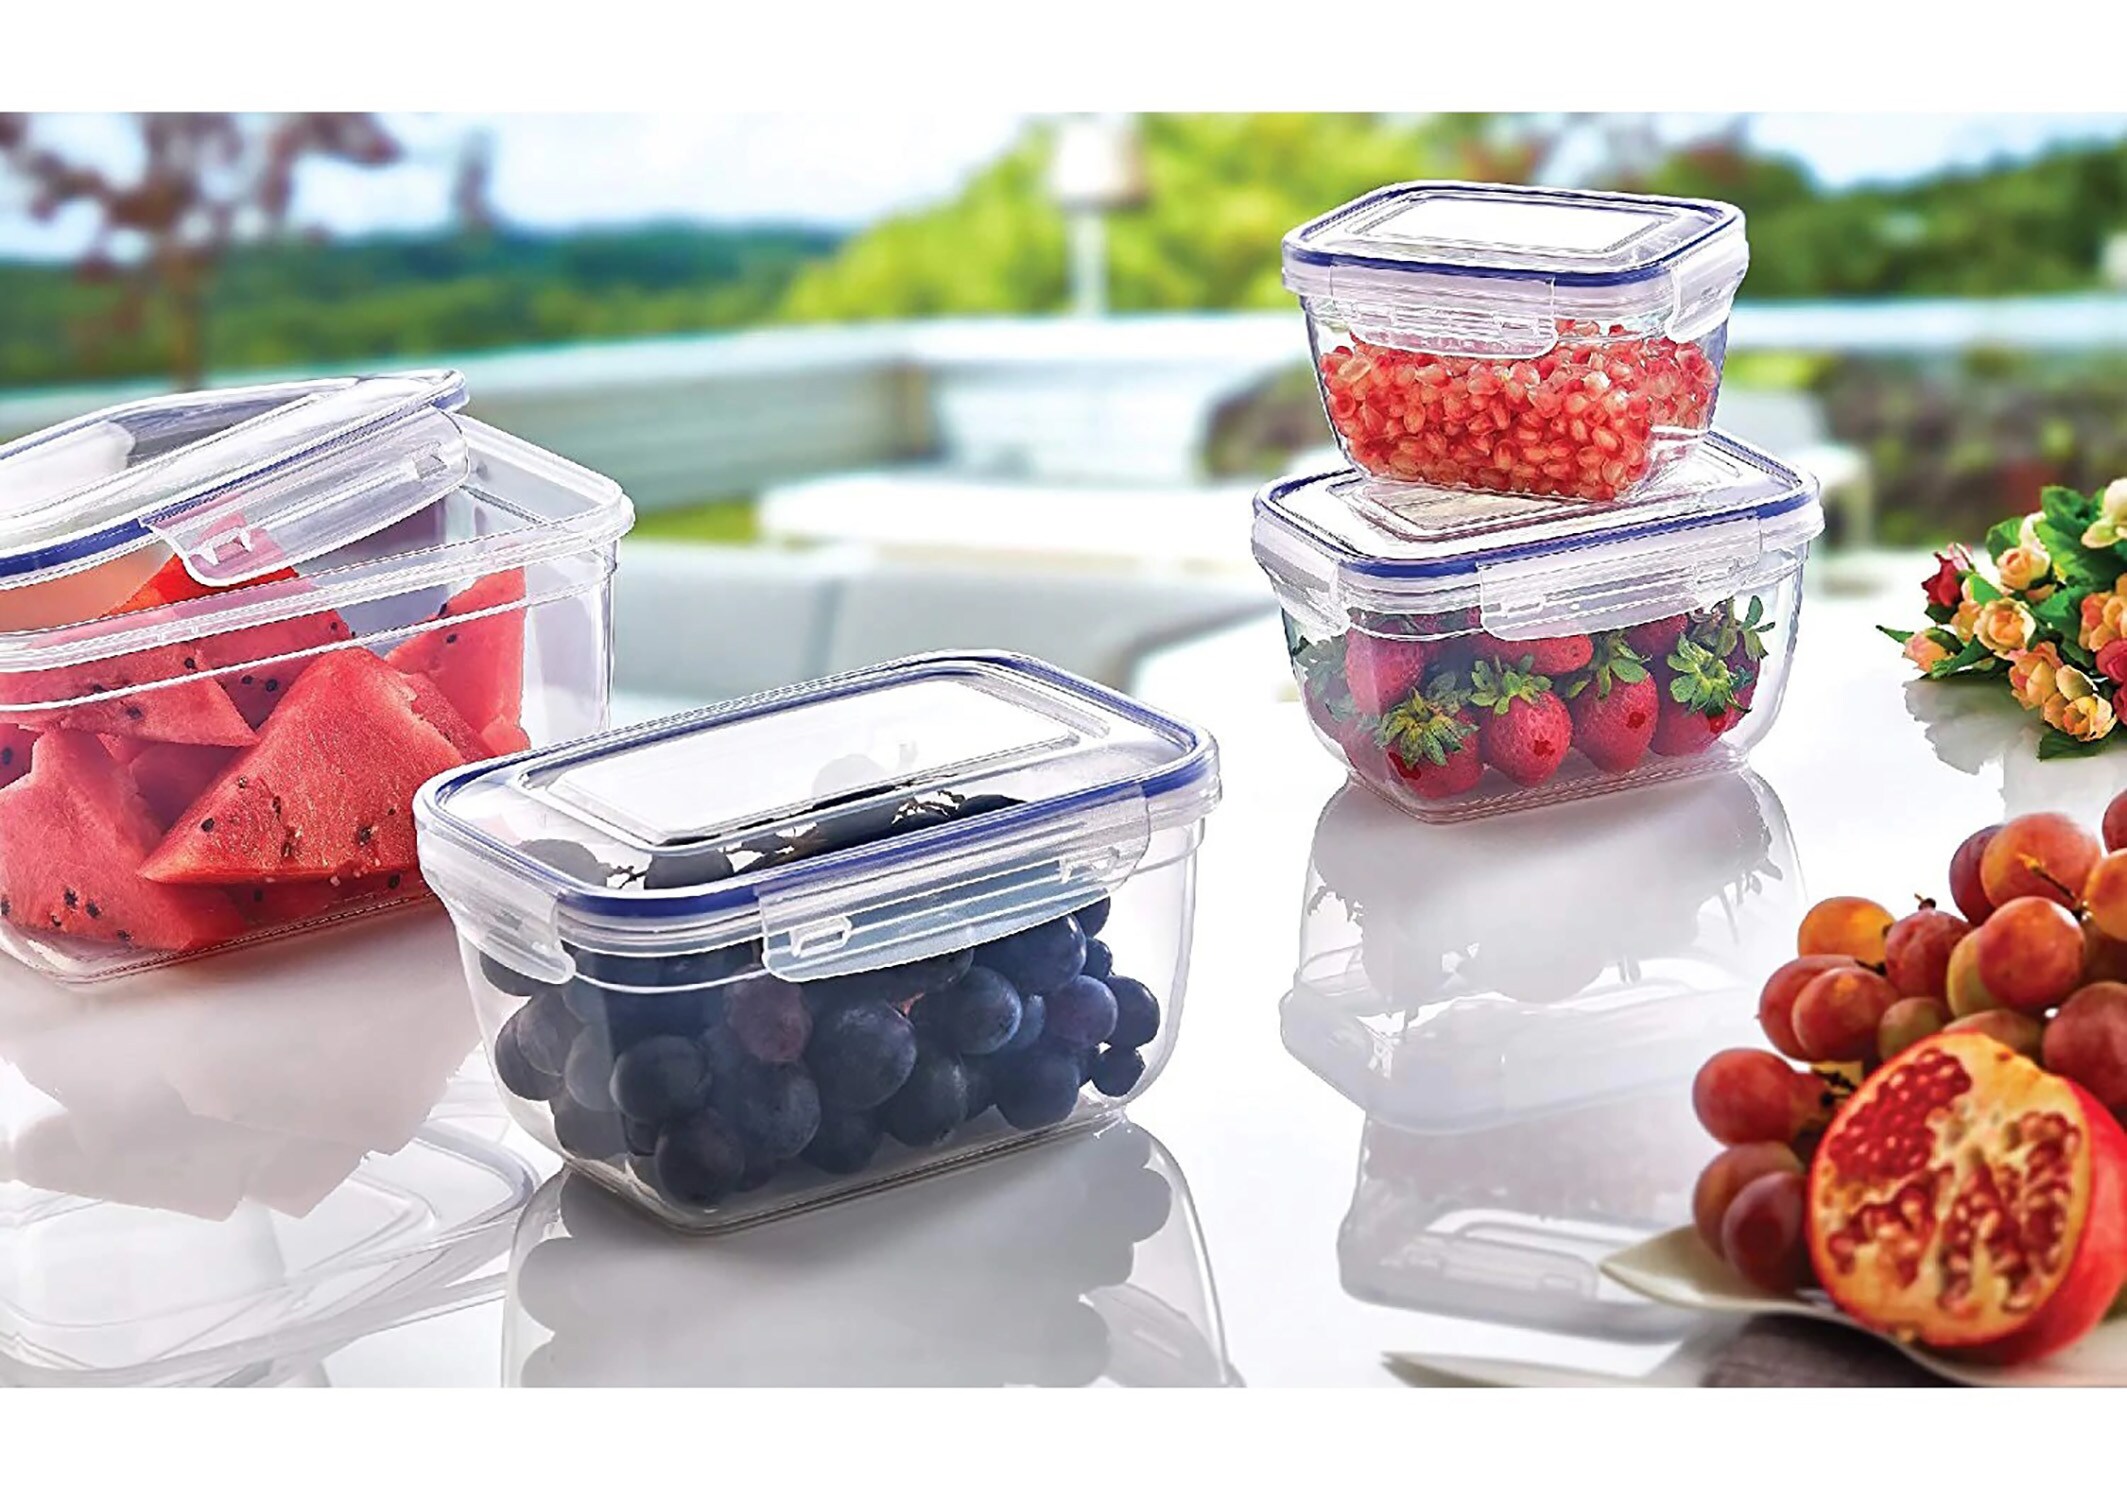 Glad 2-Pack Multisize Plastic Bpa-free Reusable Food Storage